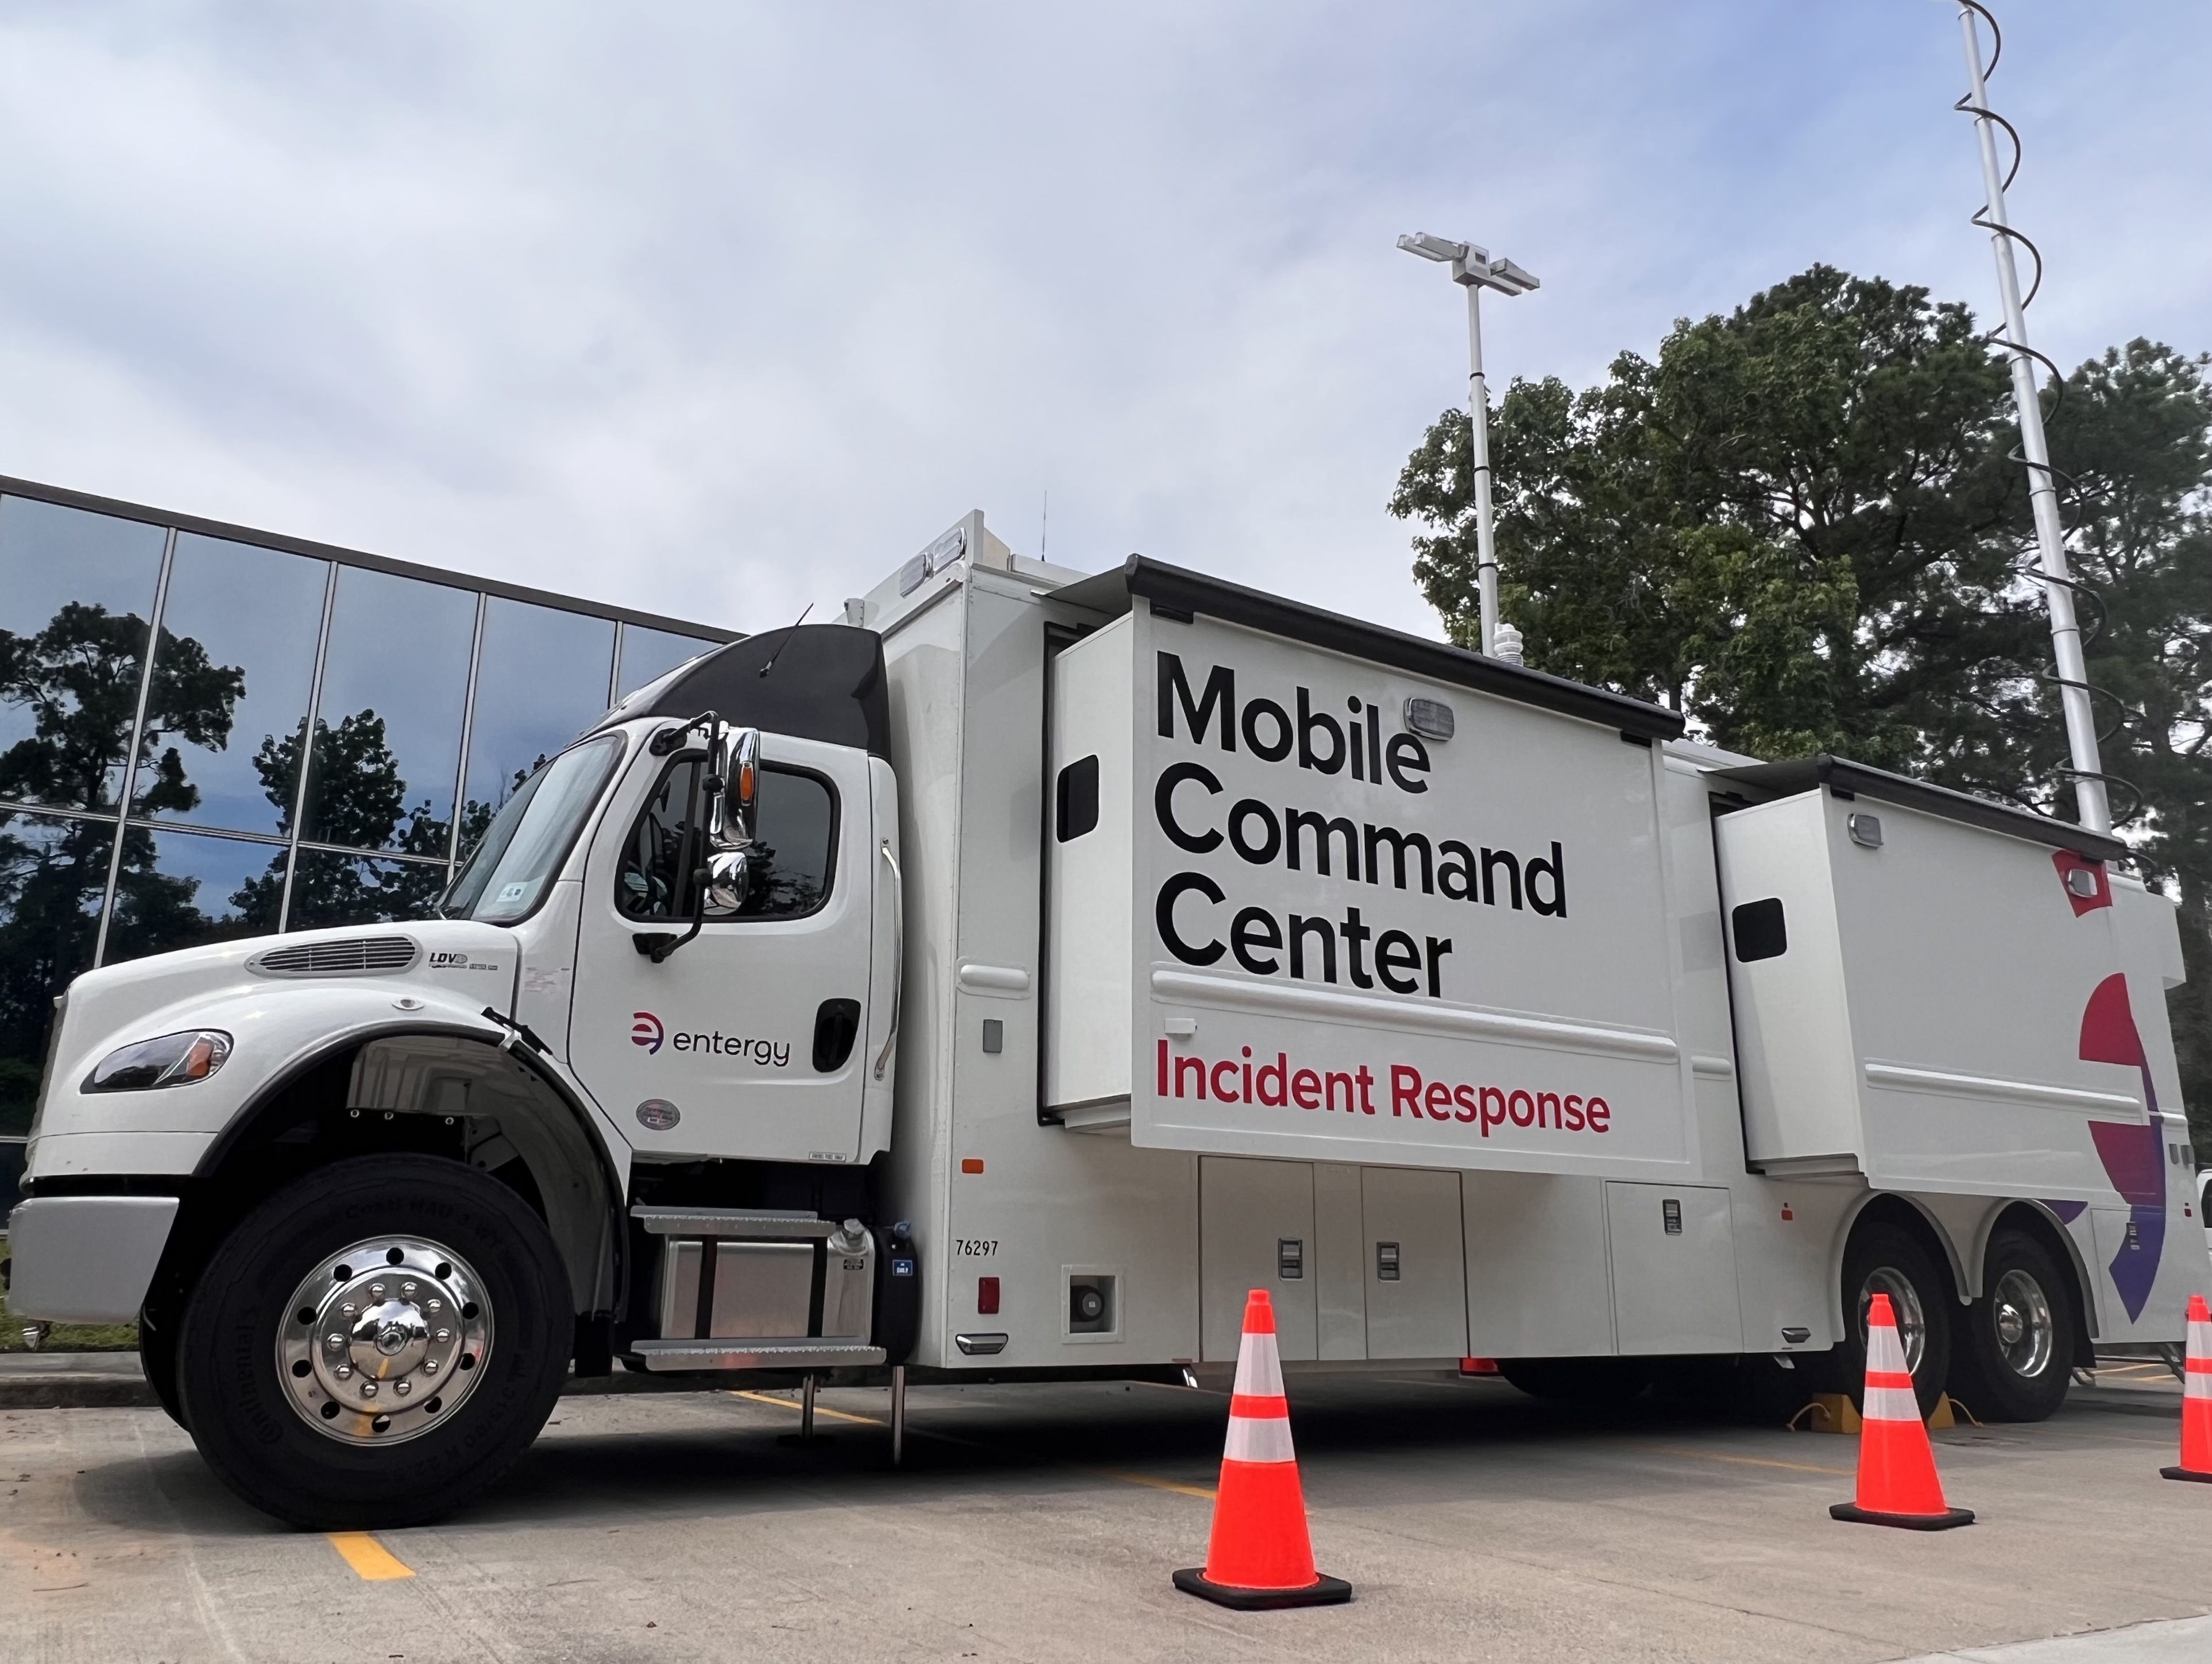 Entergy mobile command center for incident response 